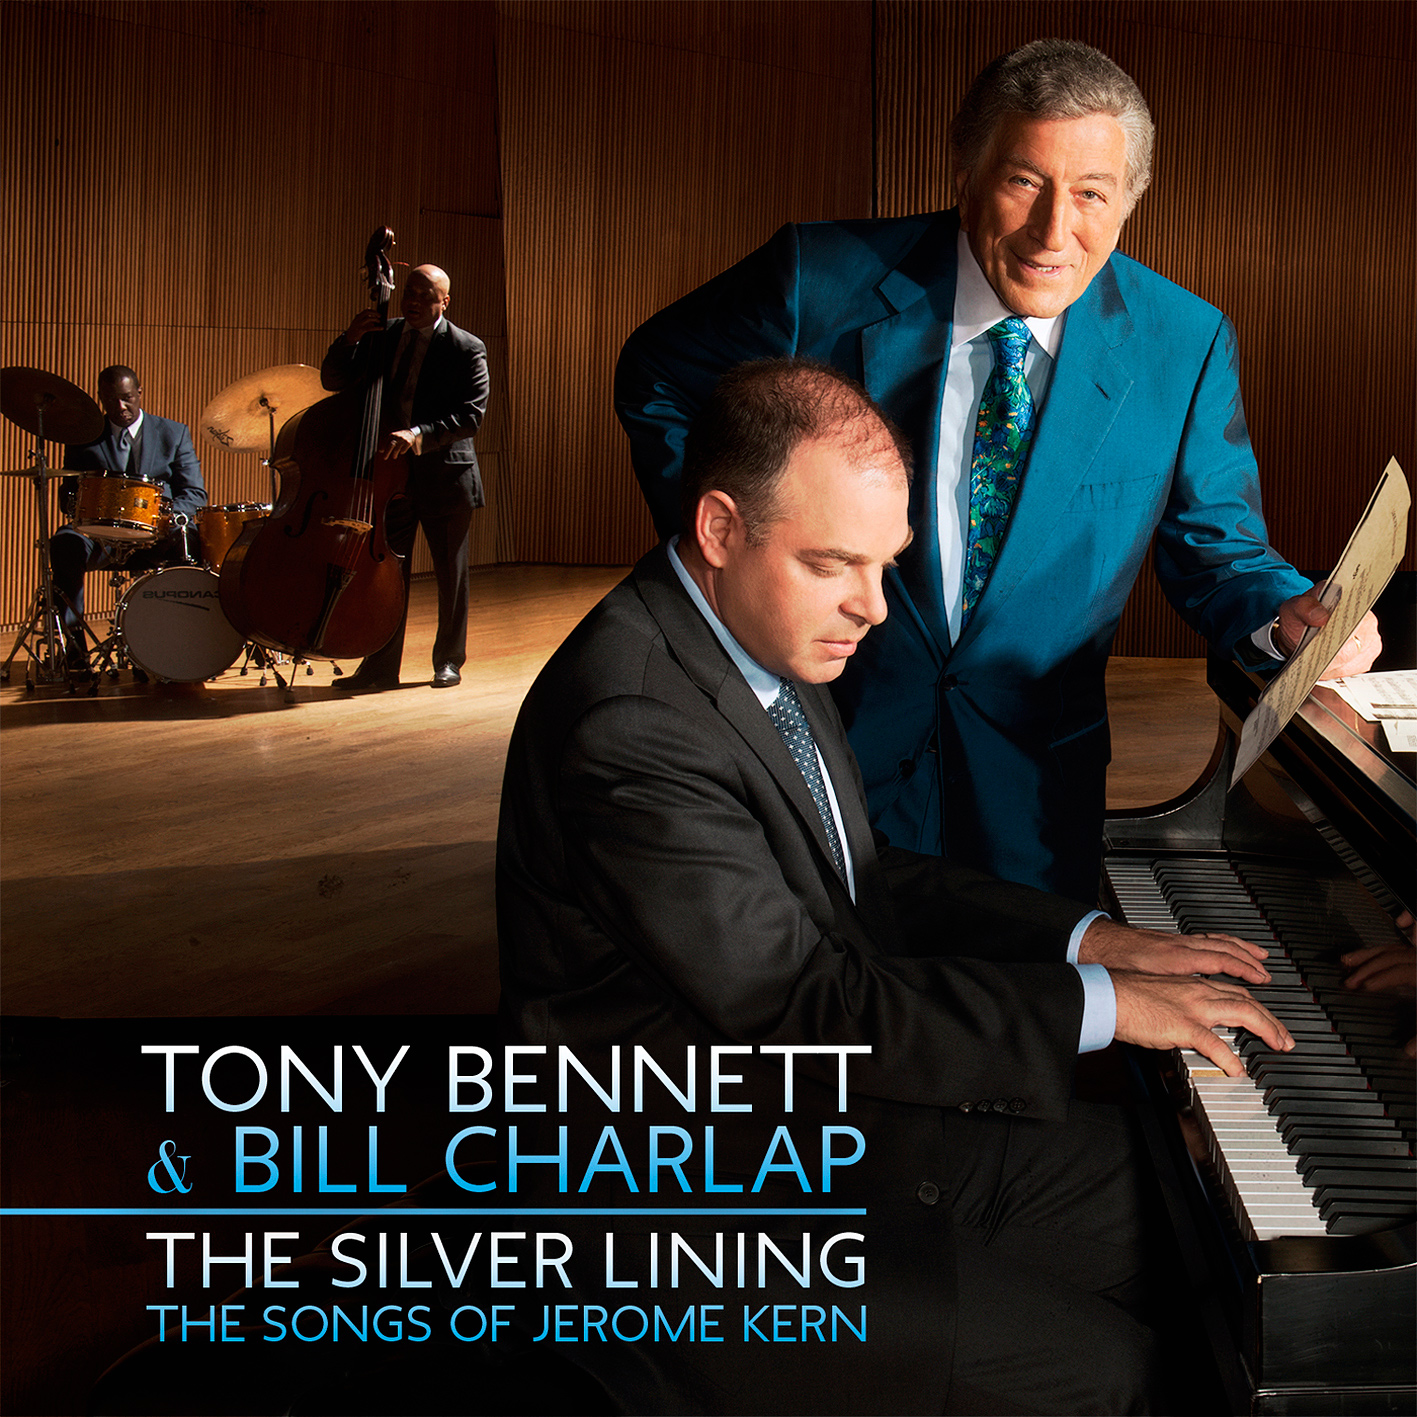 Tony Bennett & Bill Charlap – The Silver Lining: The Songs Of Jerome Kern (2015) [HDTracks FLAC 24bit/96kHz]